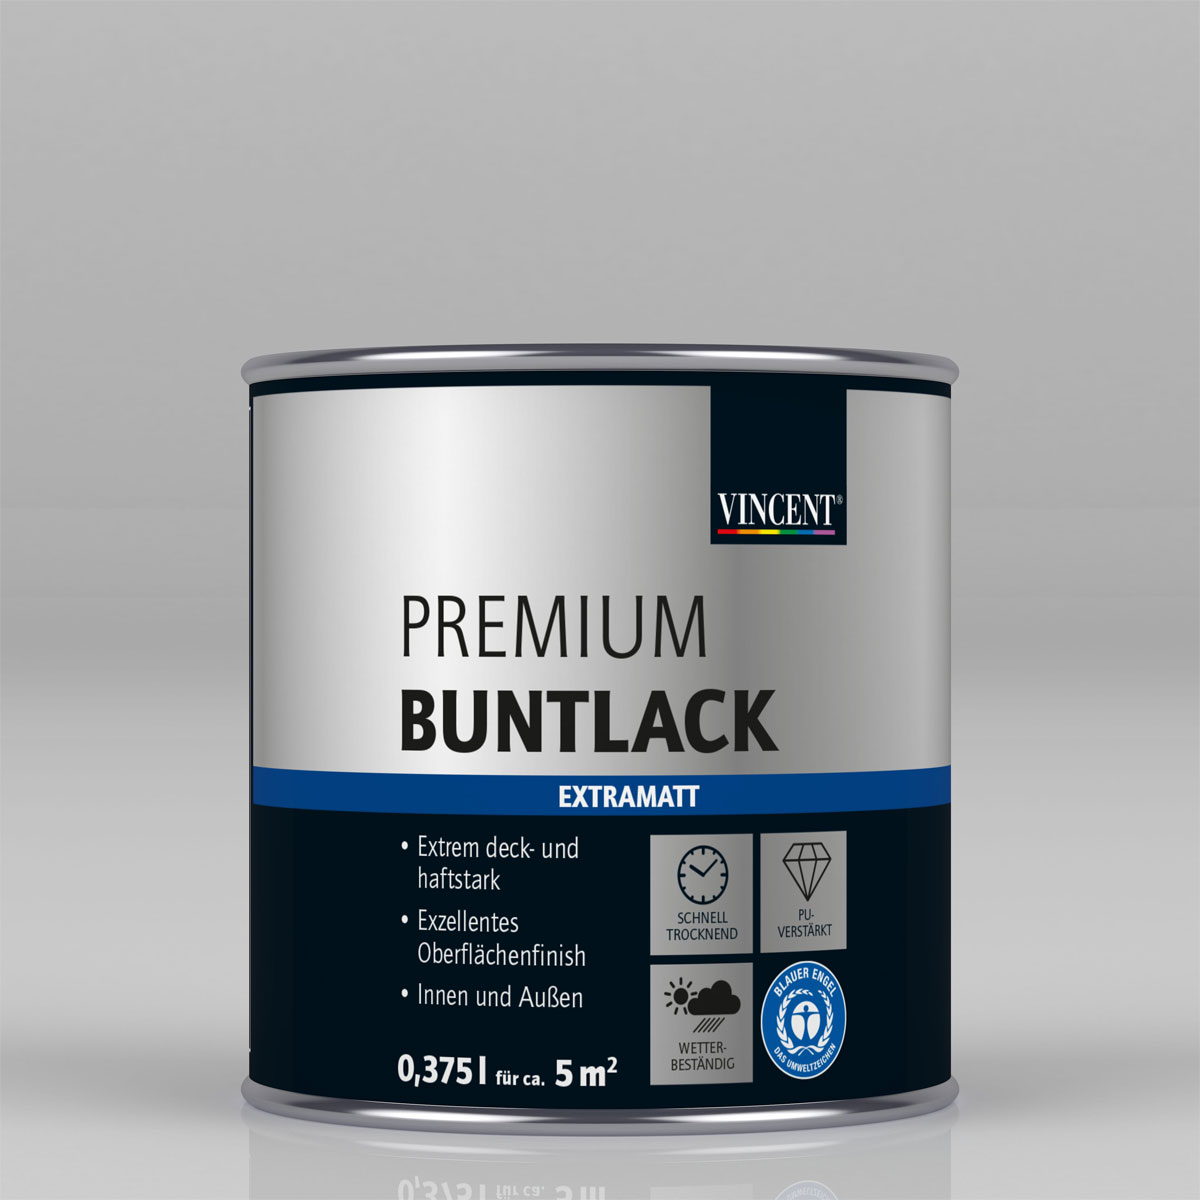 Premium Buntlack „Petrol“ extramatt, 375 ml